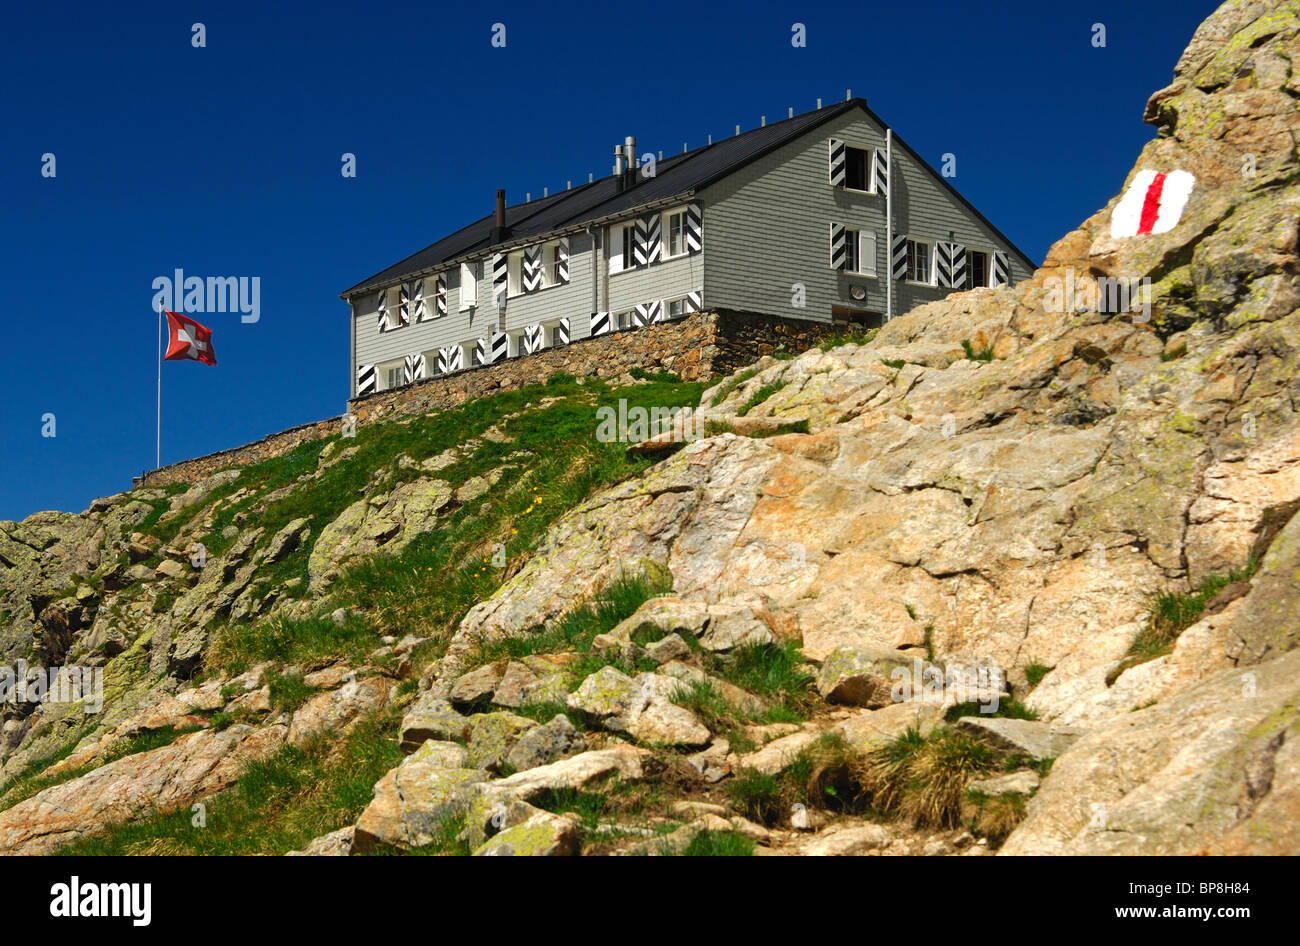 Gleckstein mountain hut of the Swiss Alpine Club (SAC), Grindelwald, Switzerland Stock Photo